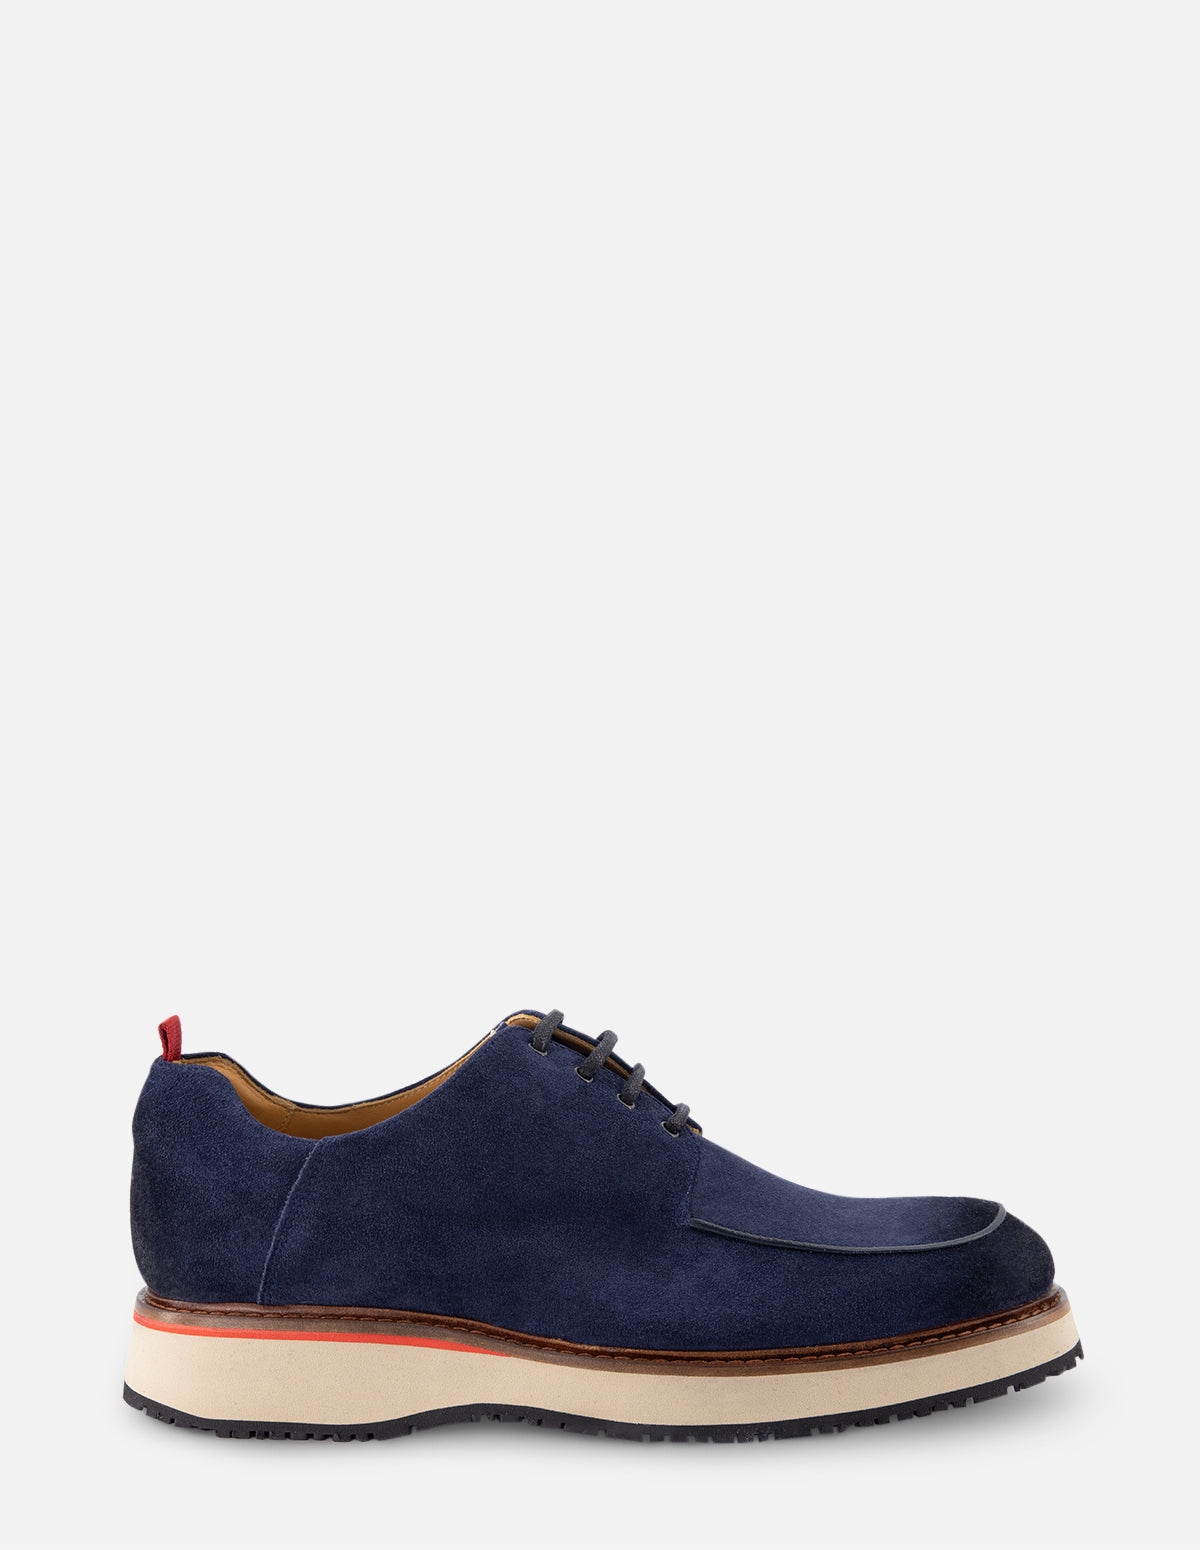 Zapato Blucher en piel ante color azul para hombre